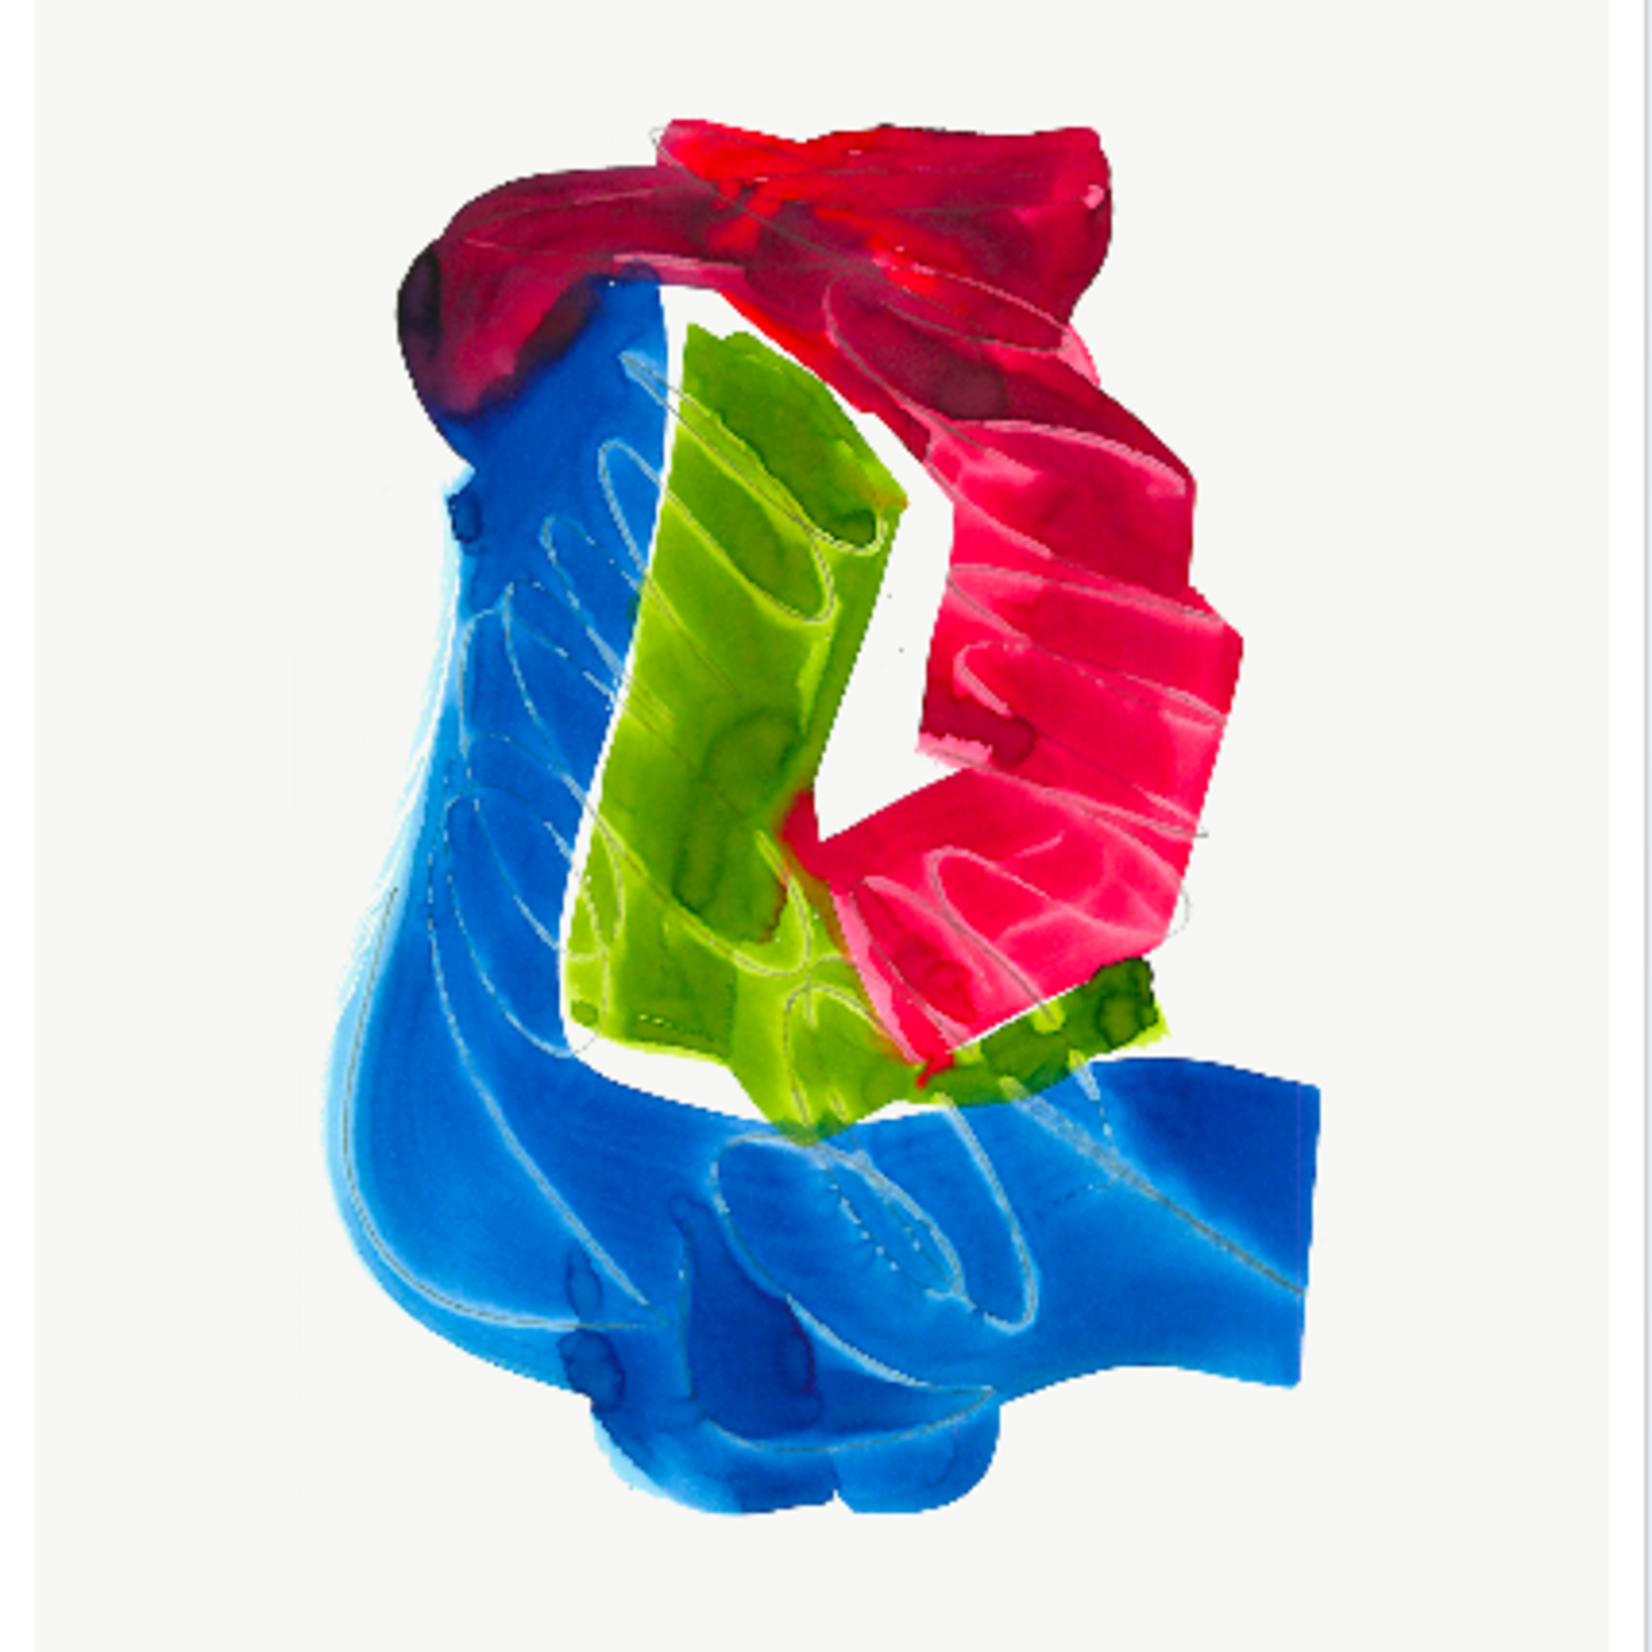 Framed Print on Rag Paper: Color Study 8 By Encarnacion Portal Rubio